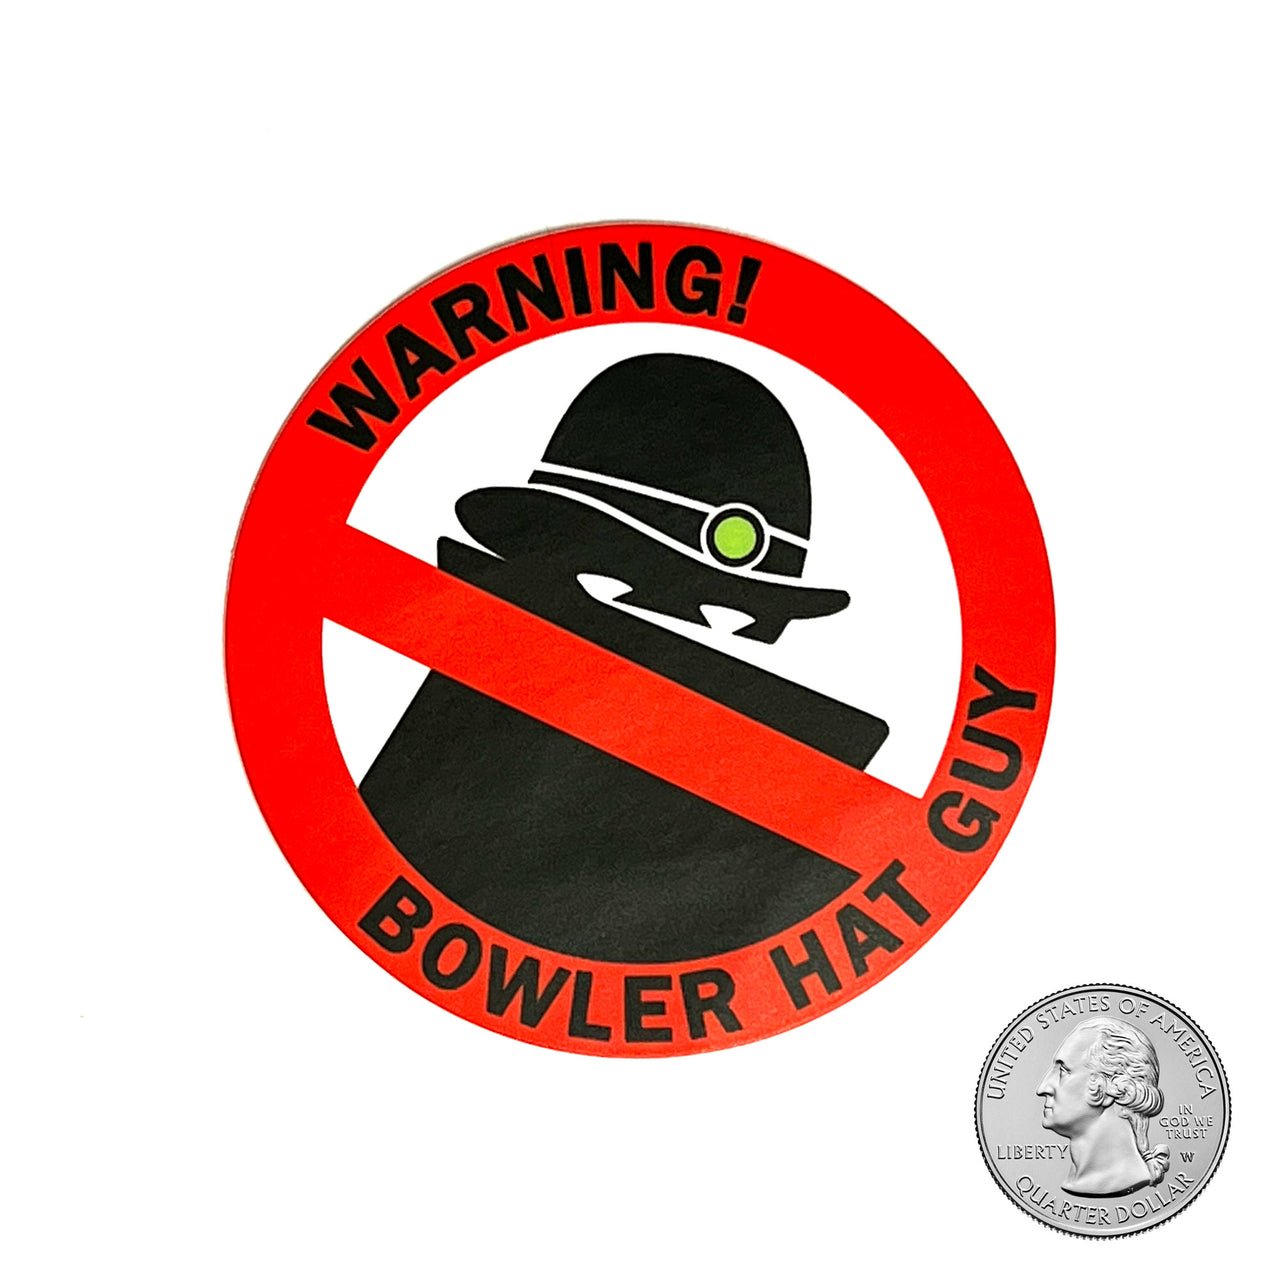 Bowler Hat Guy Sticker - Whosits & Whatsits